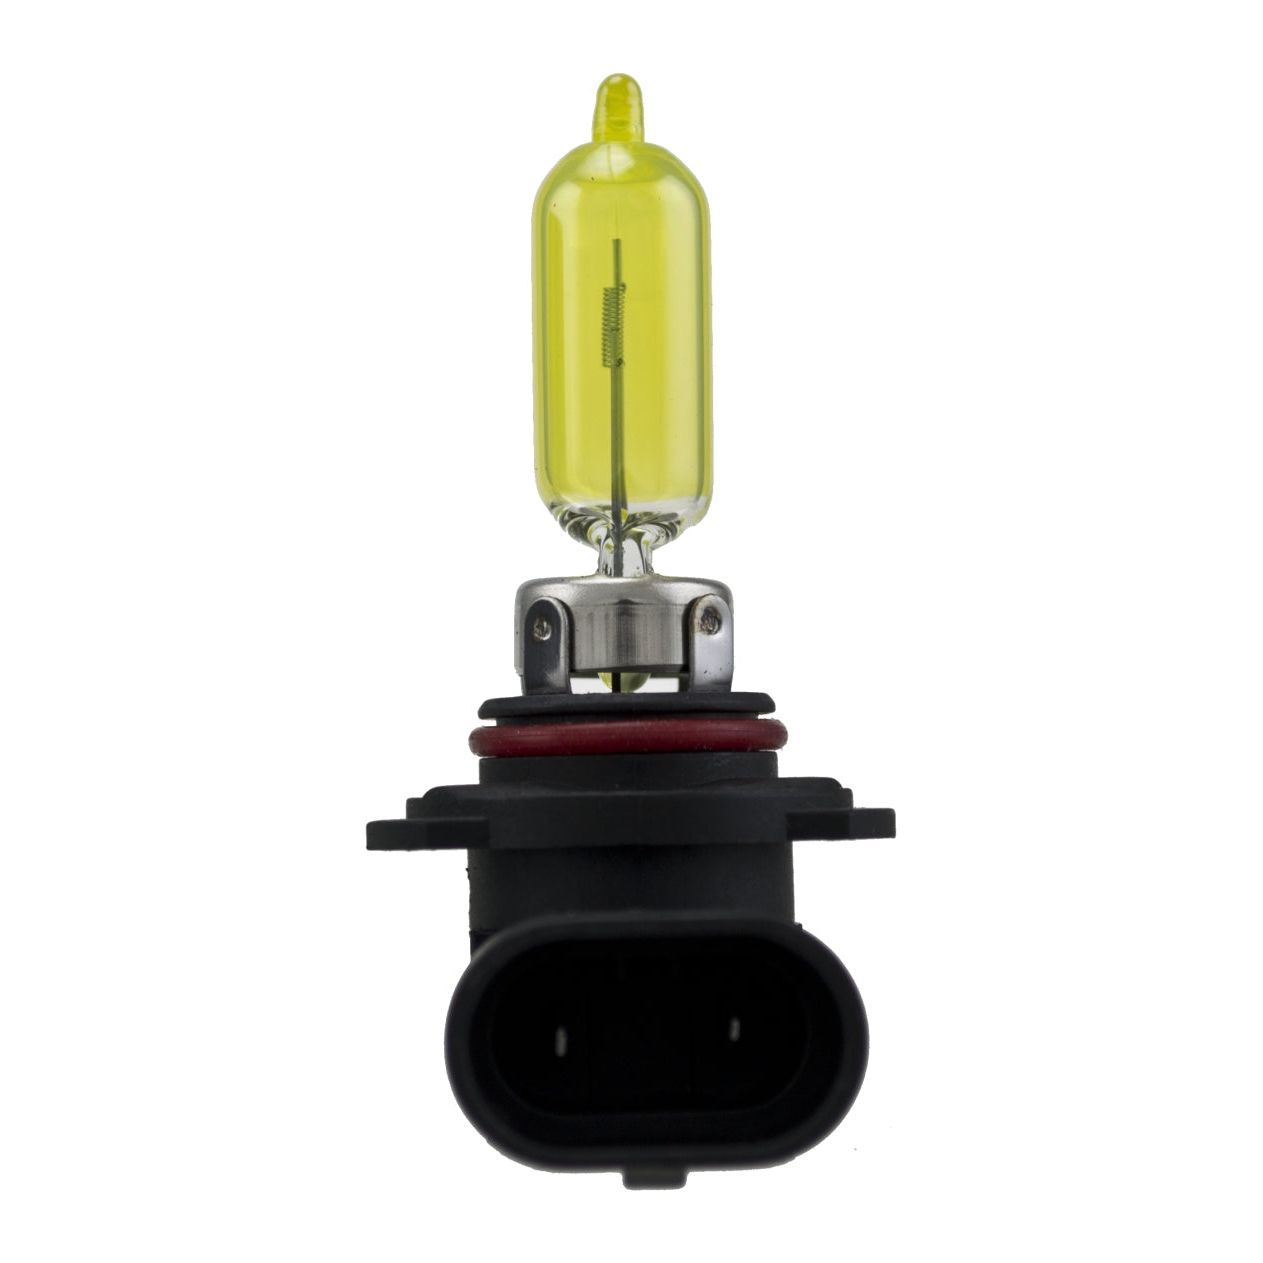 Hella Optilux HB3 9005 12V/65W XY Xenon Yellow Bulb-Bulbs-Hella-HELLAH71070582-SMINKpower Performance Parts